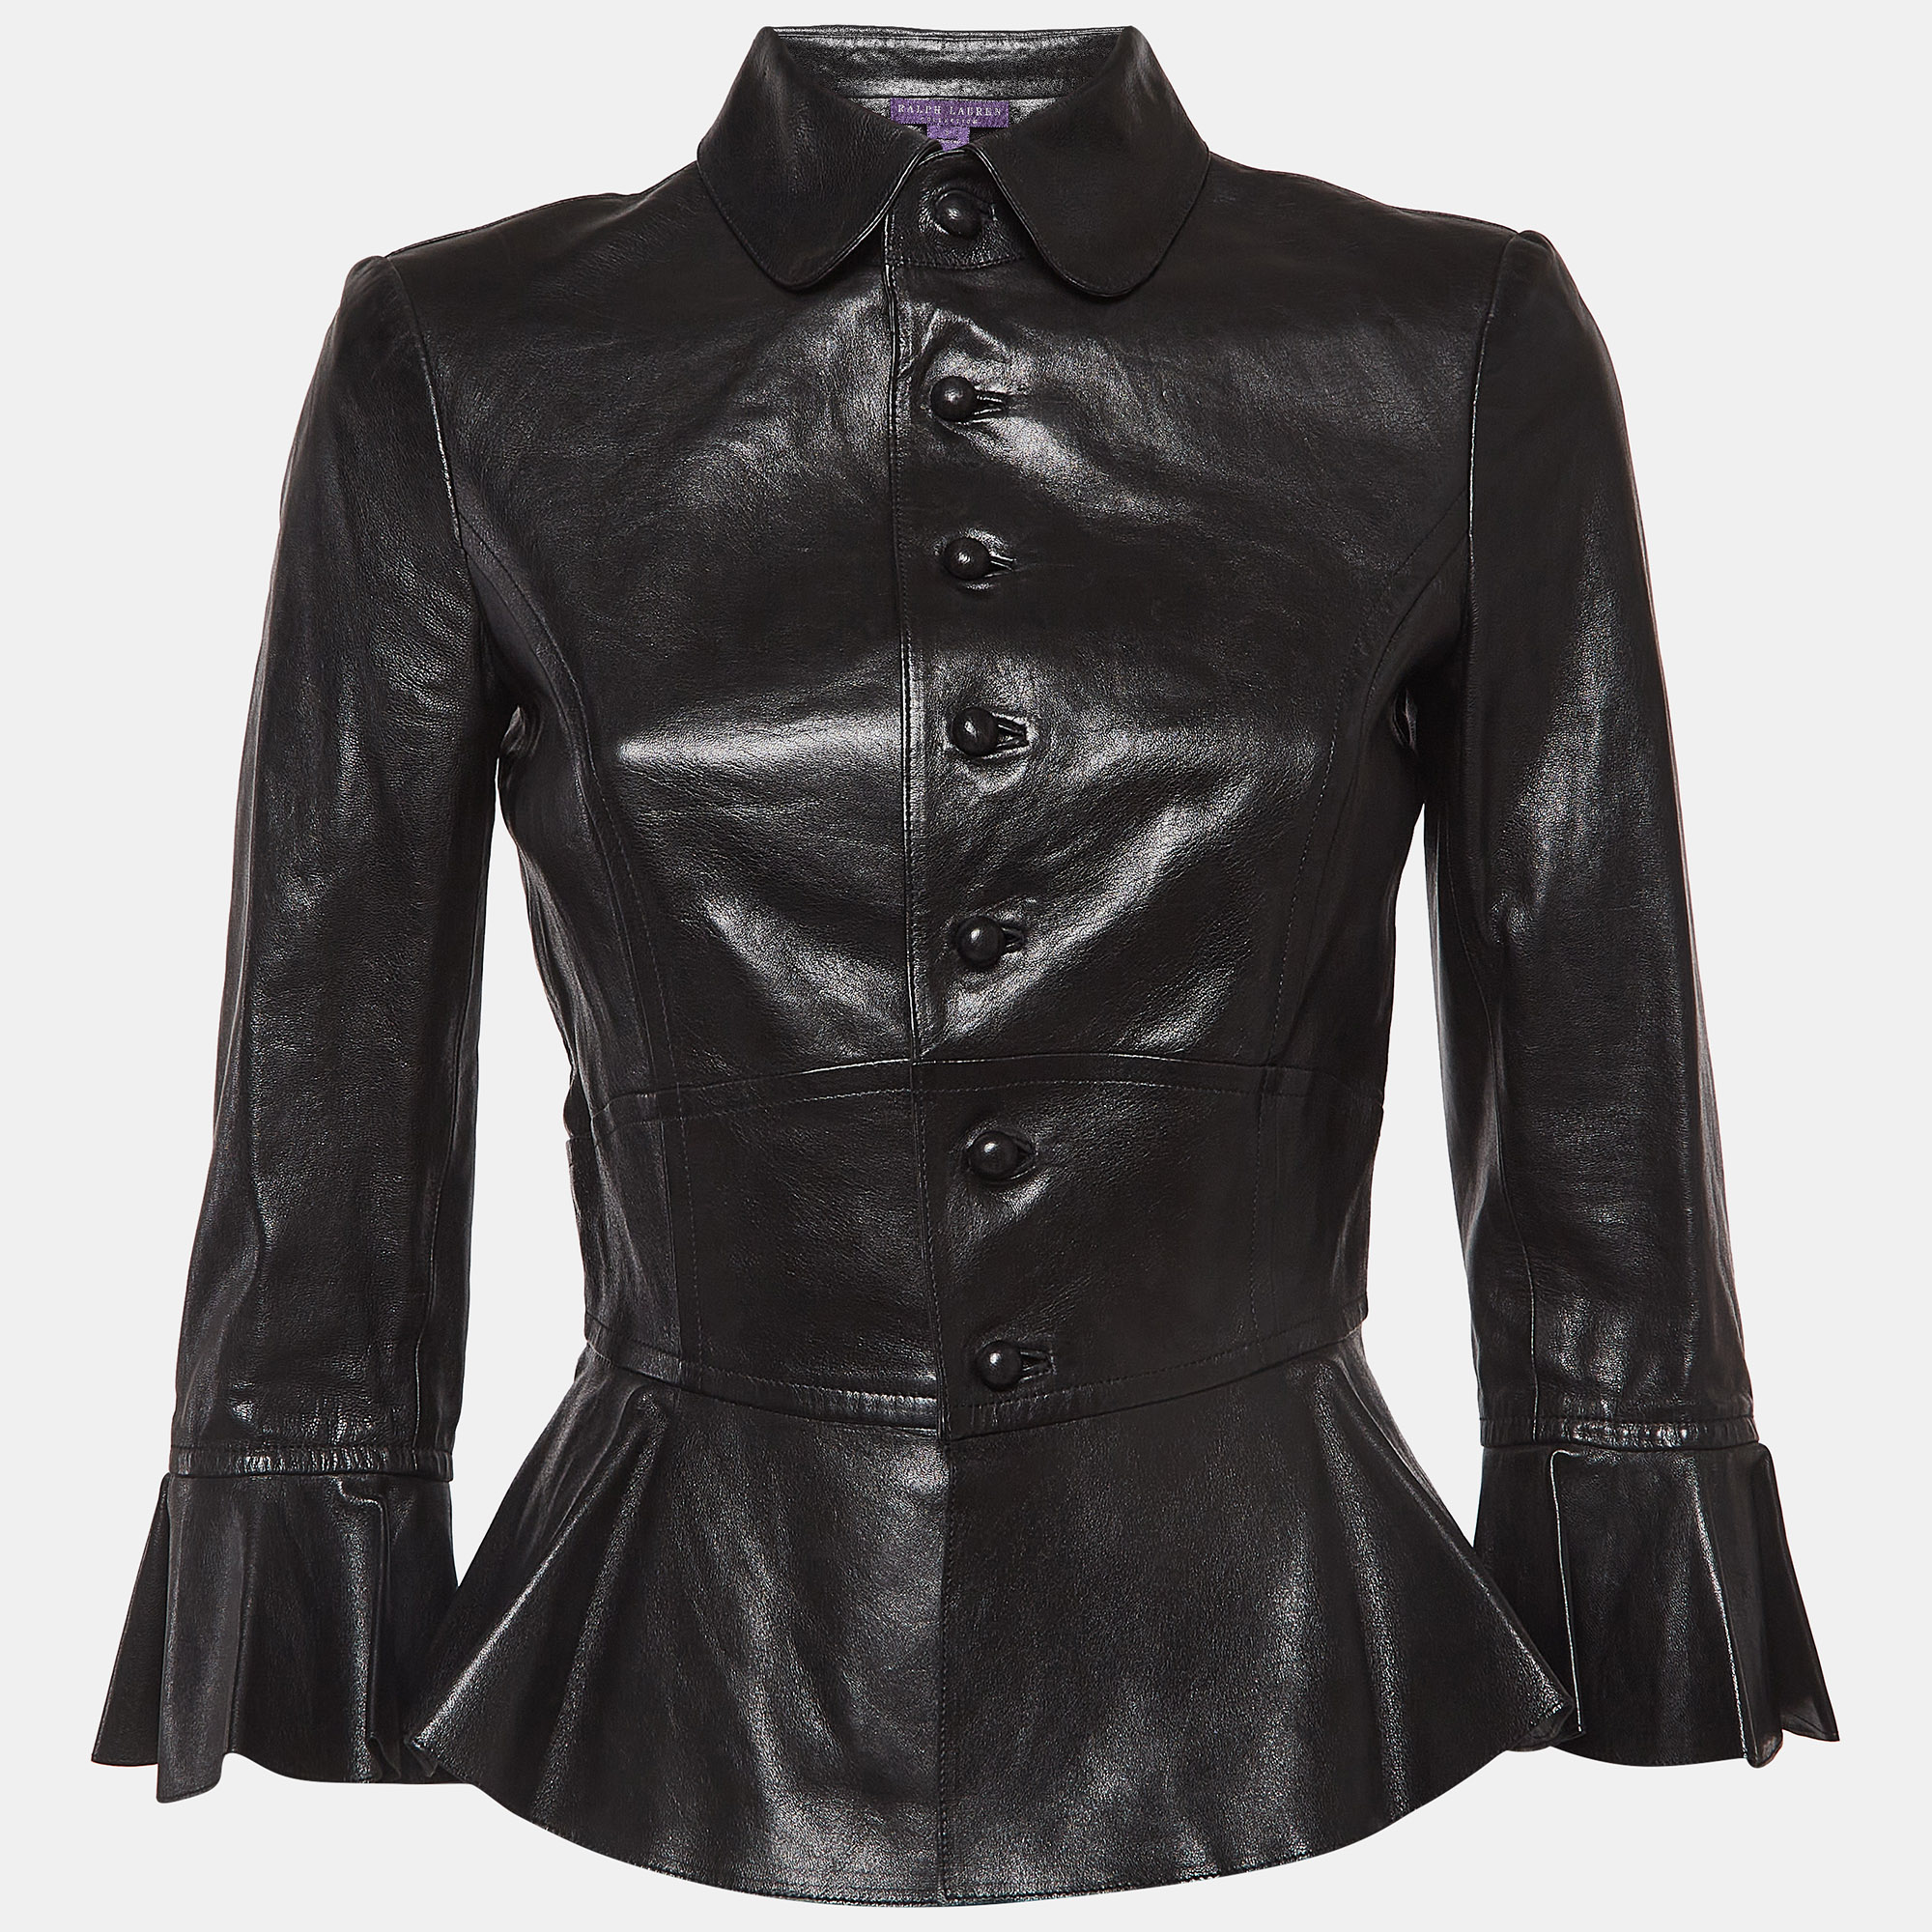 

Ralph Lauren Collection Black Leather Peplum Style Jacket